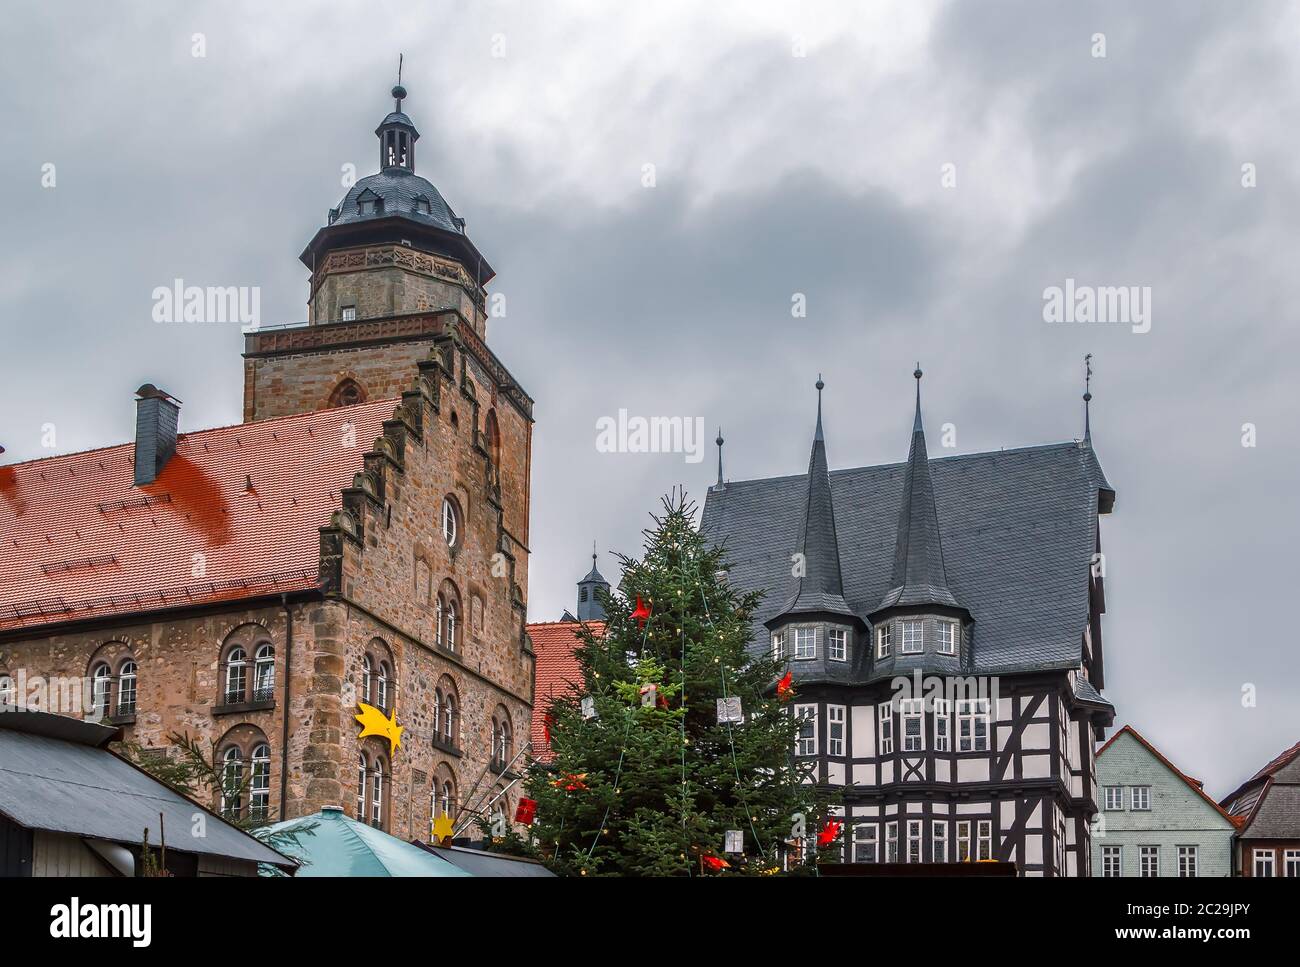 Alsfeld à christmastime, Allemagne Banque D'Images